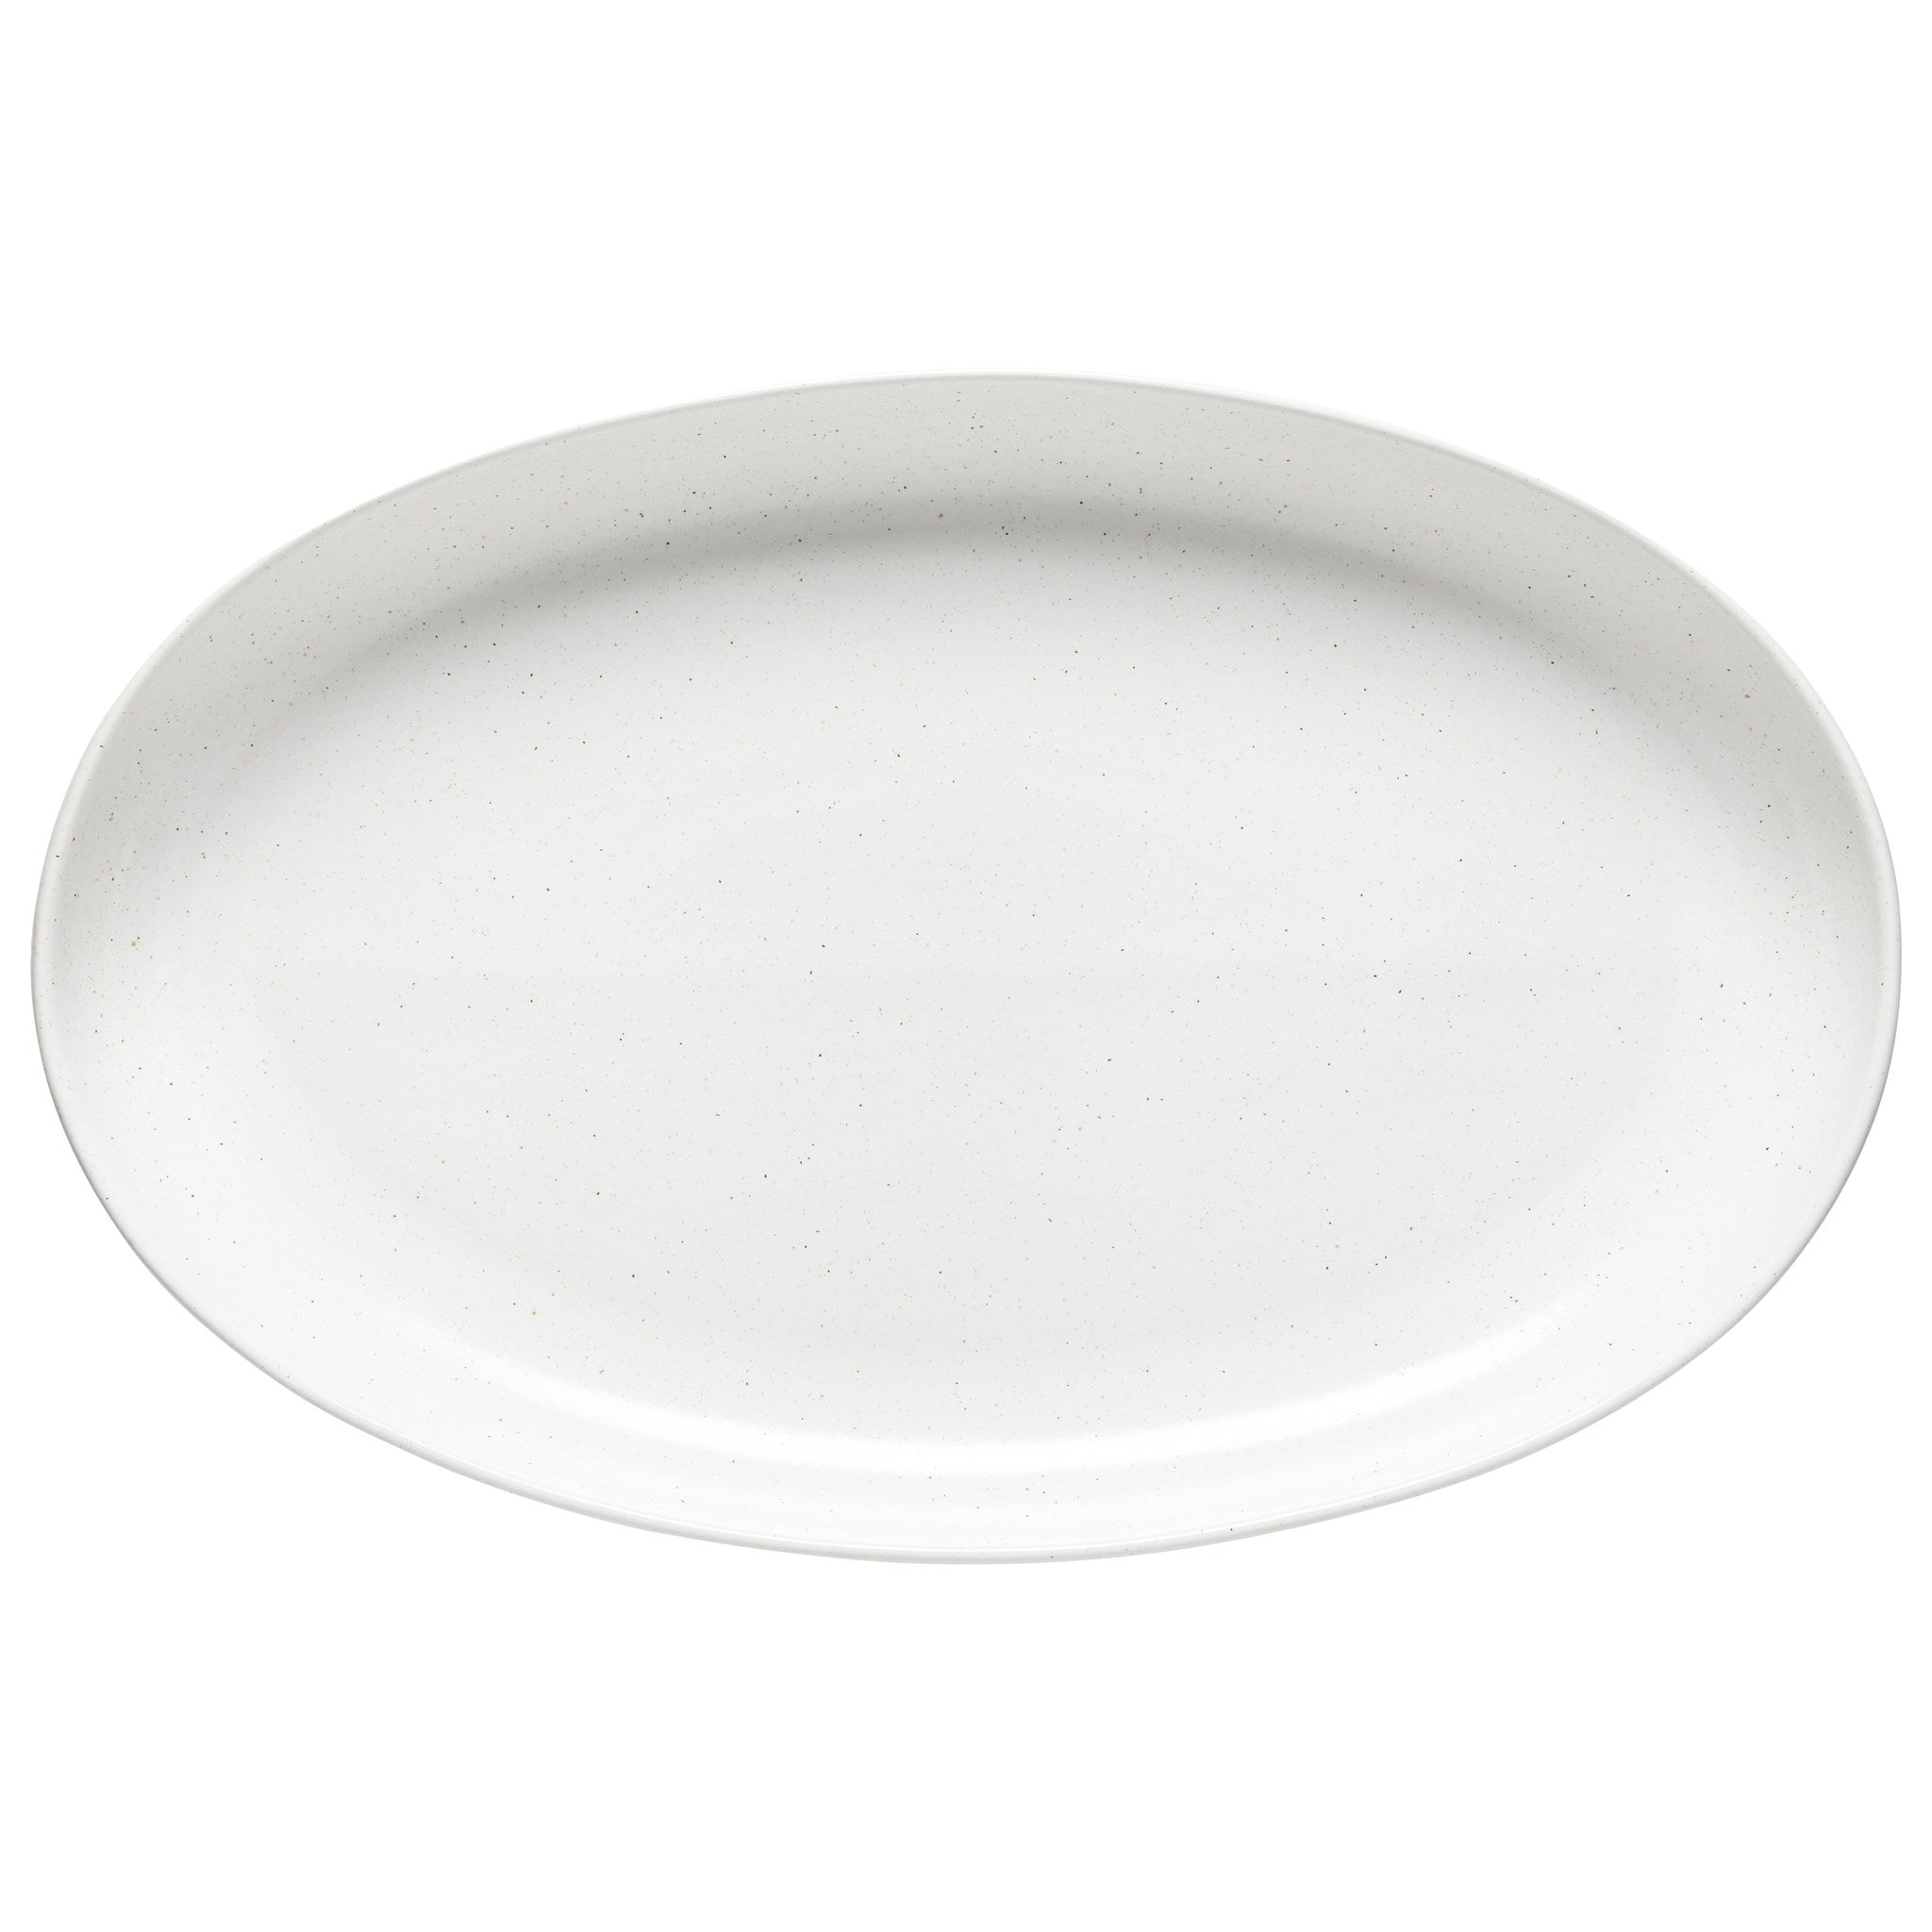 Madeira Serving Plate